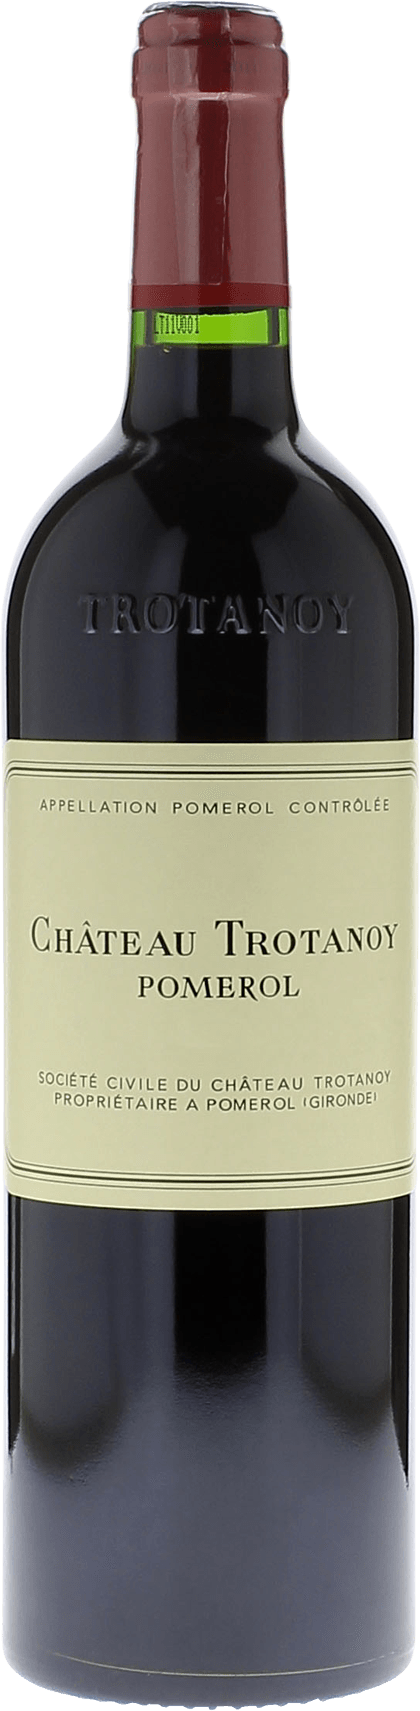 Trotanoy 1982  Pomerol, Bordeaux rouge